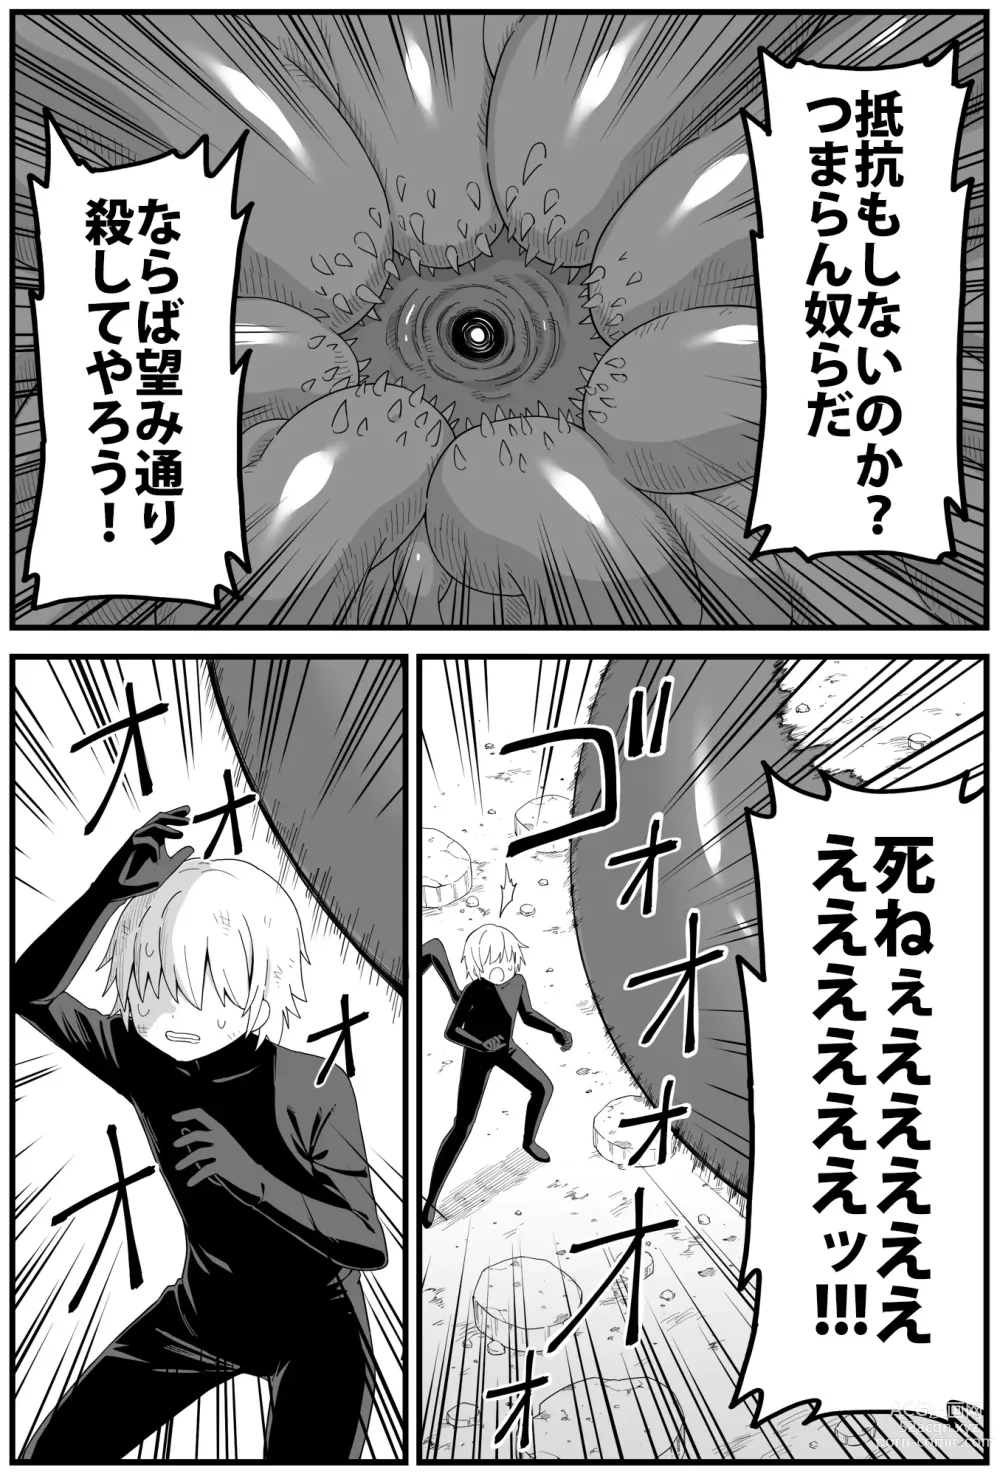 Page 2 of doujinshi 危険区域06